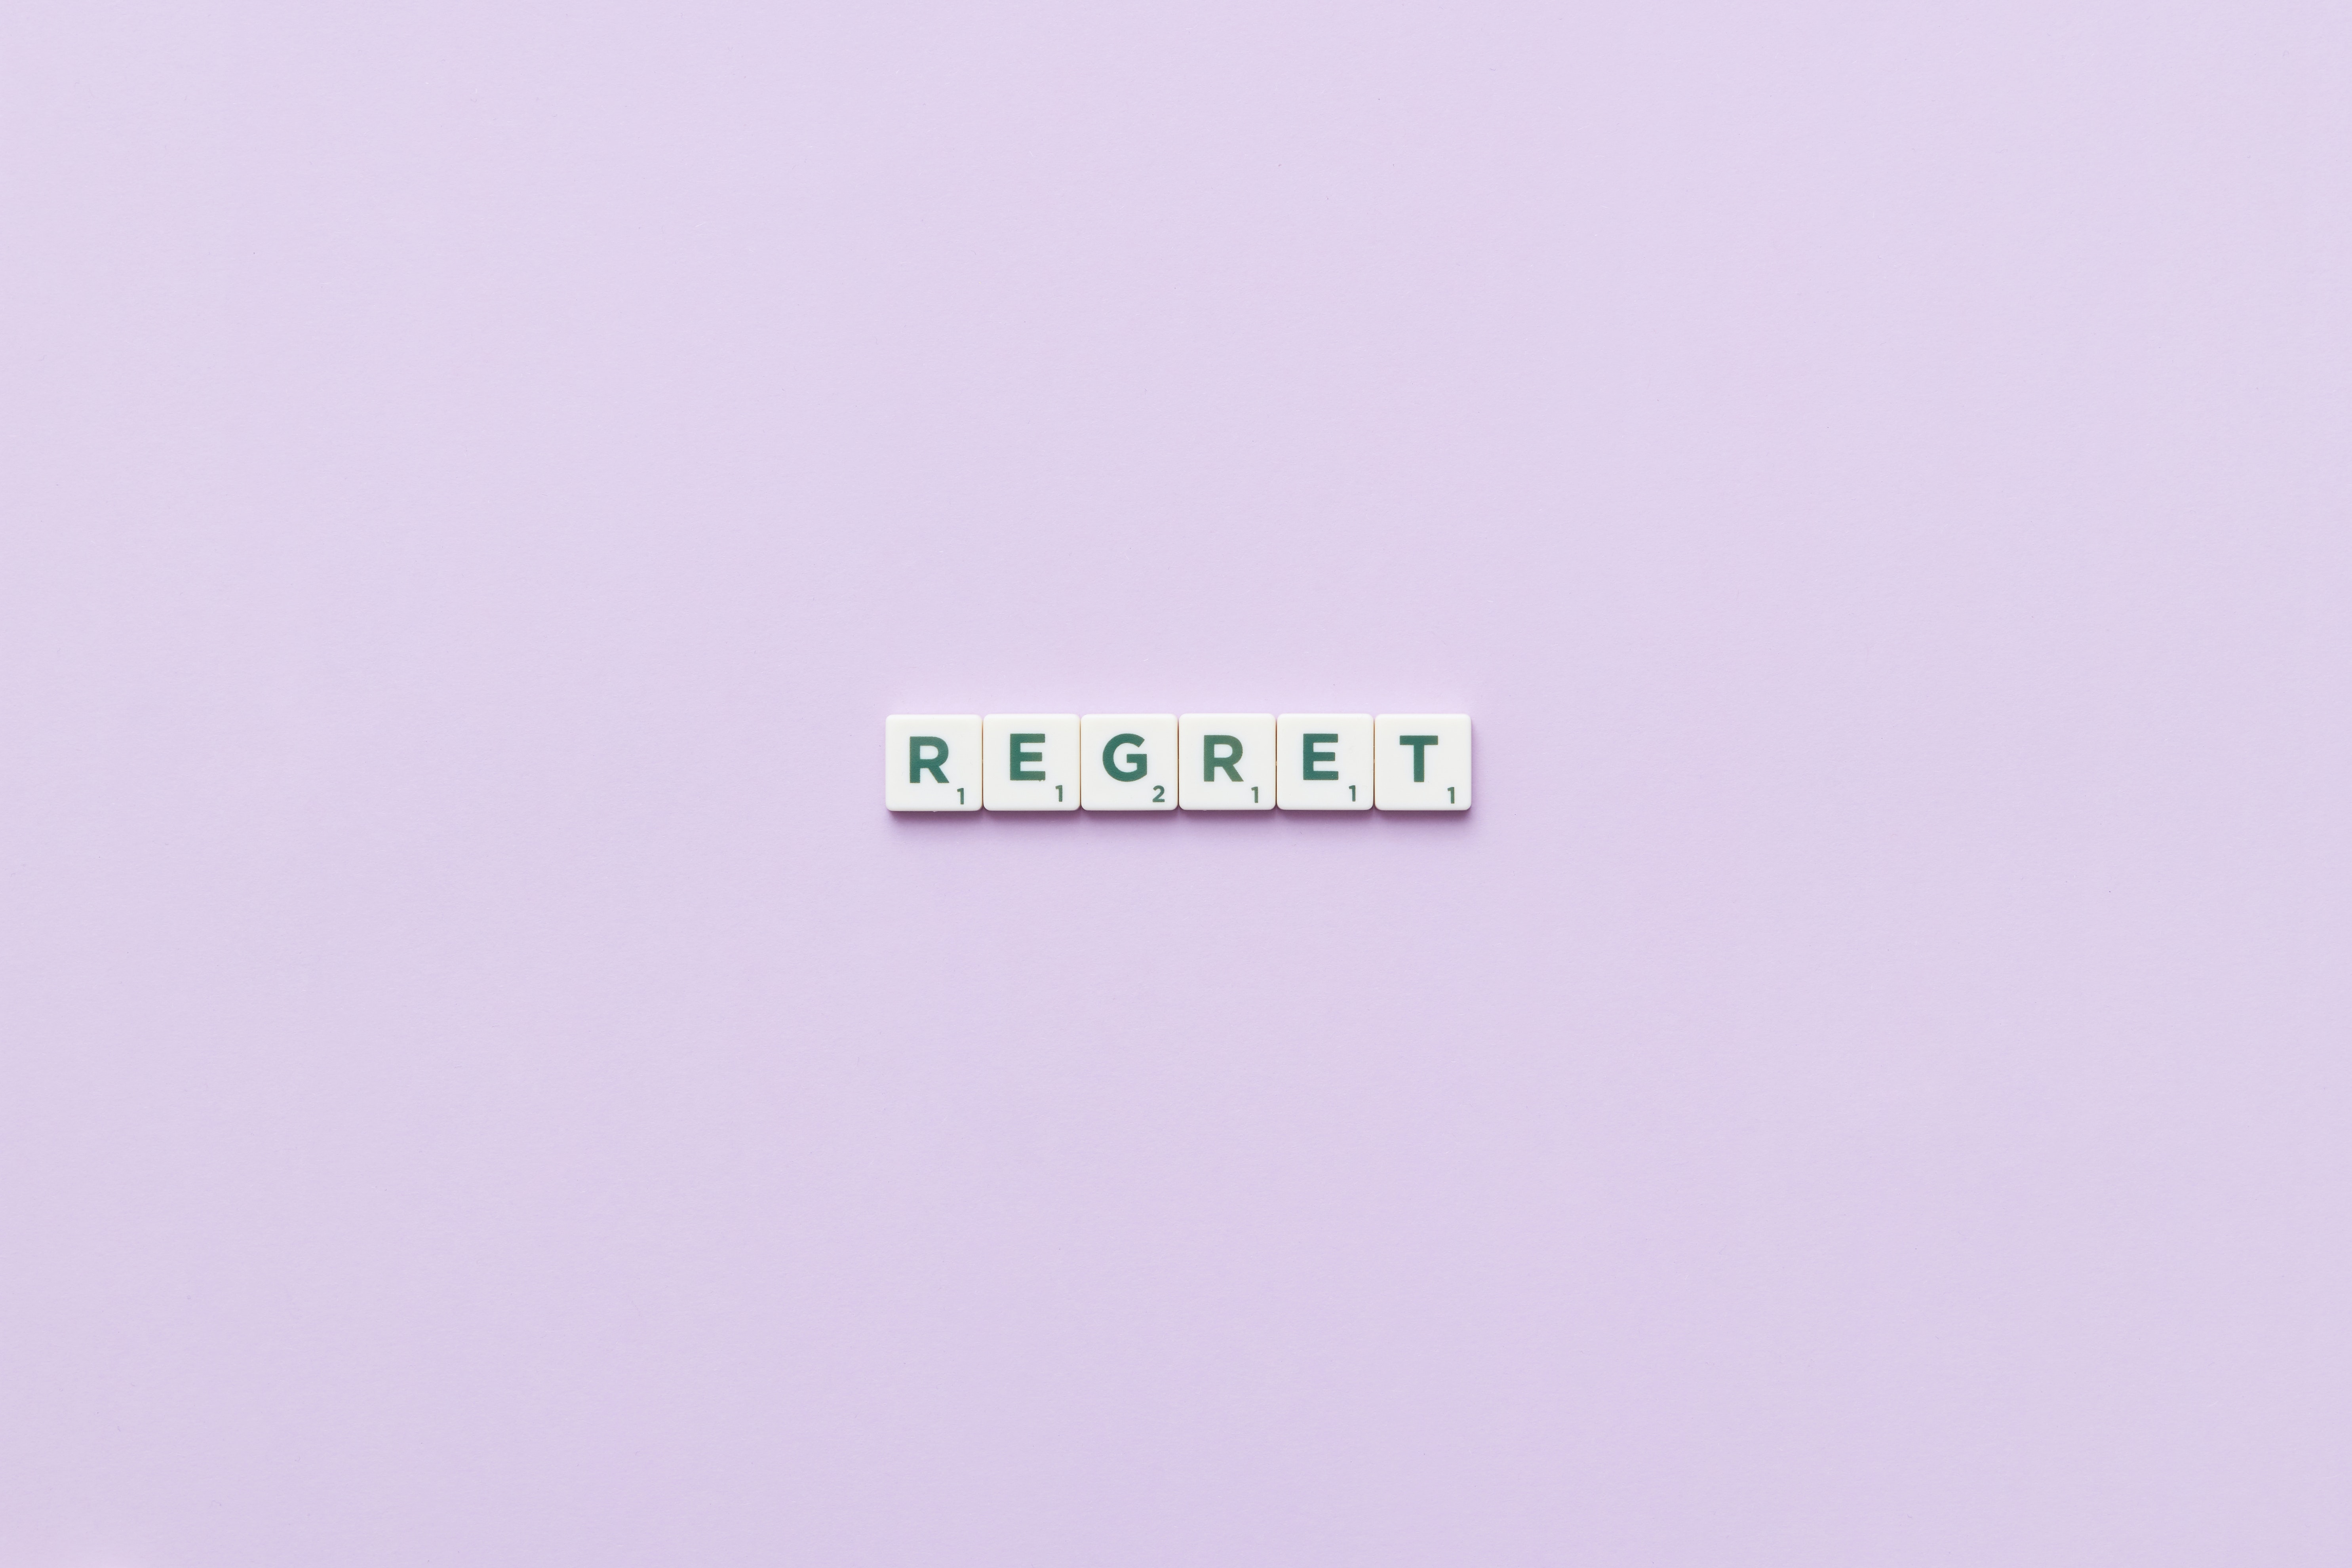 regret spelled out